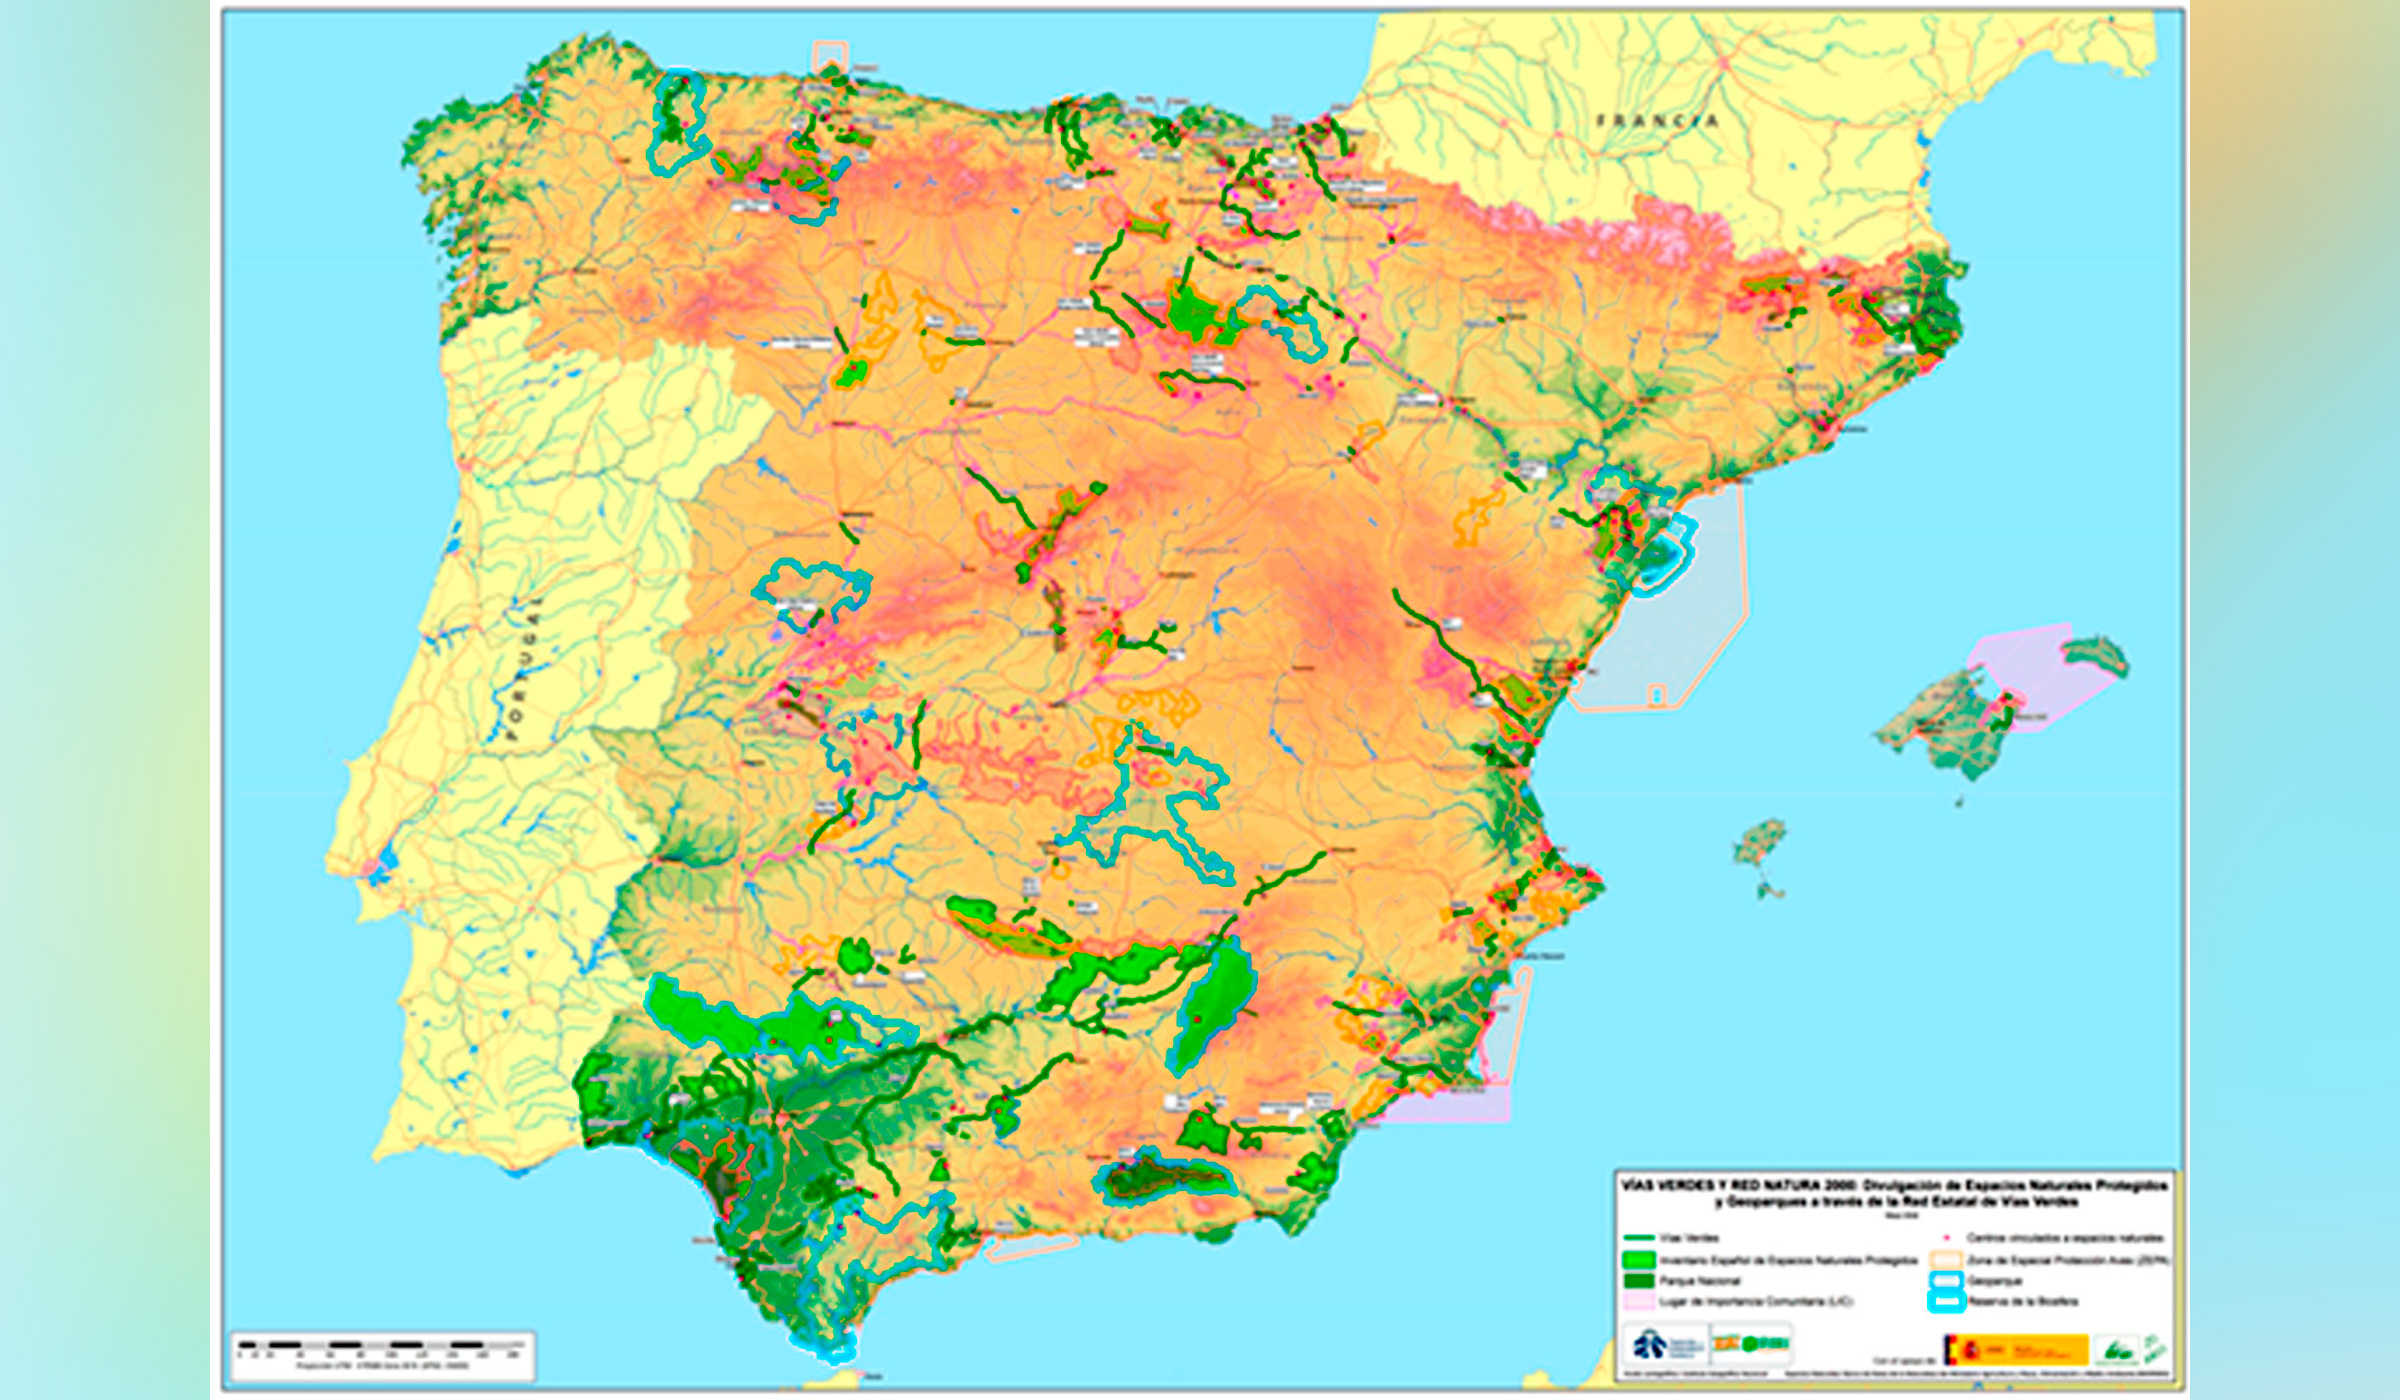 Mapa Red Natura 2000